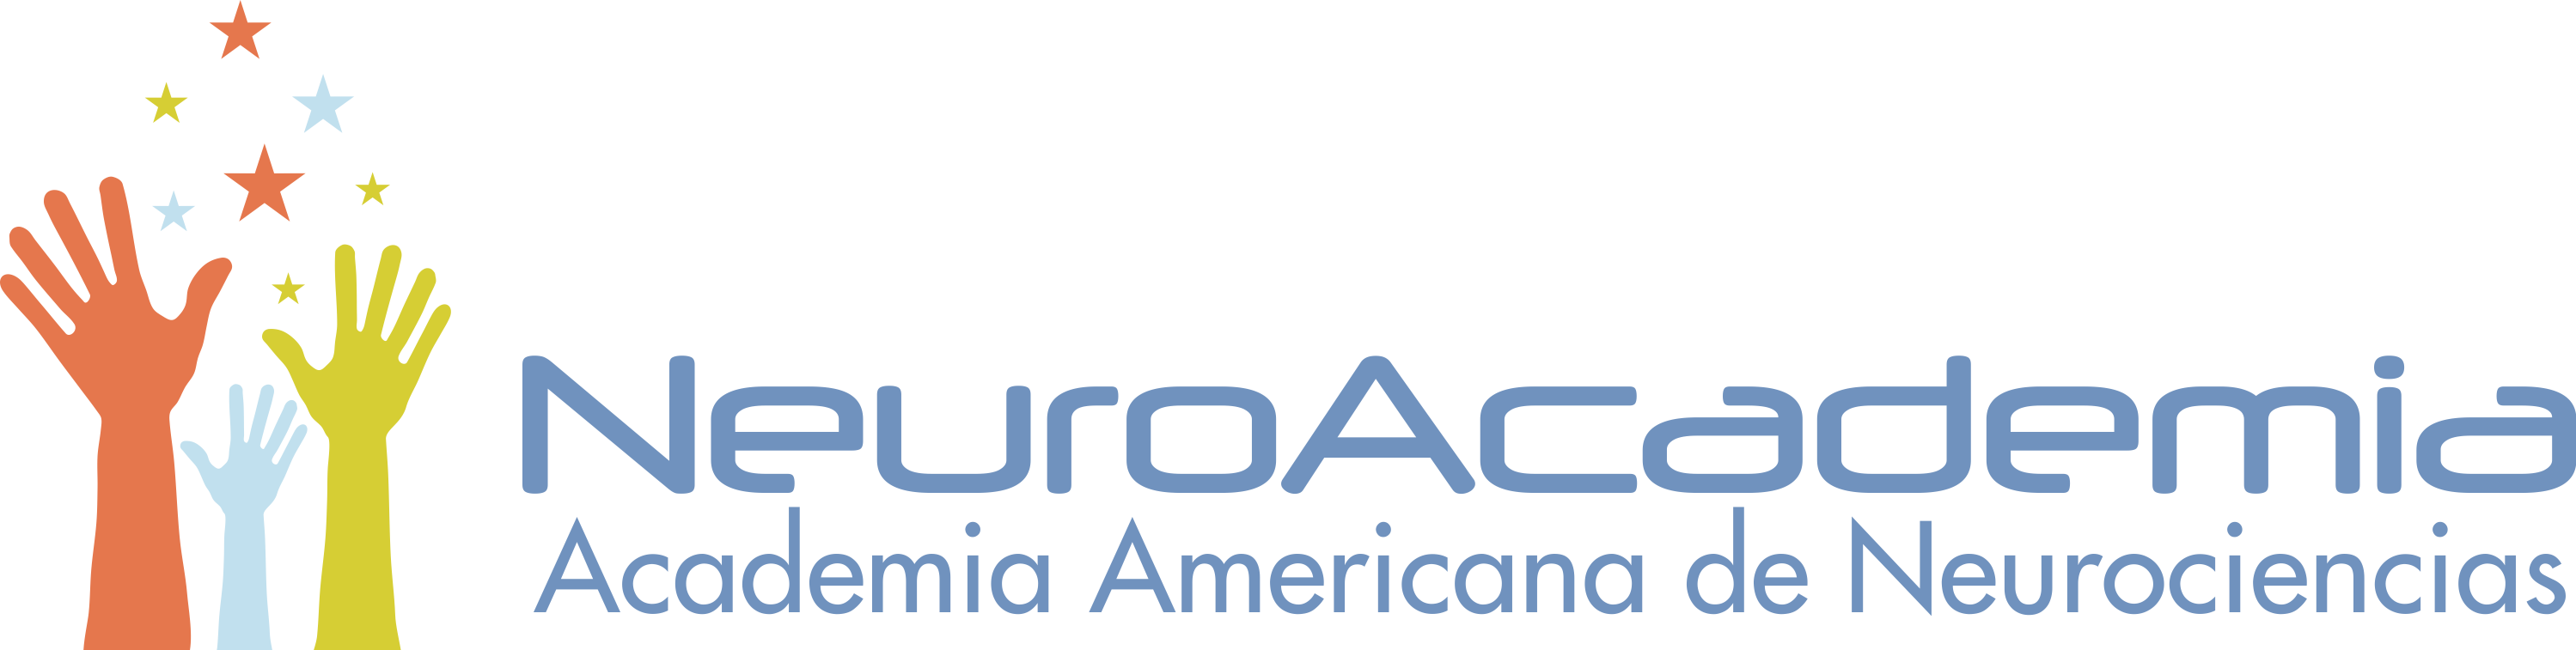 NeuroAcademia Logo